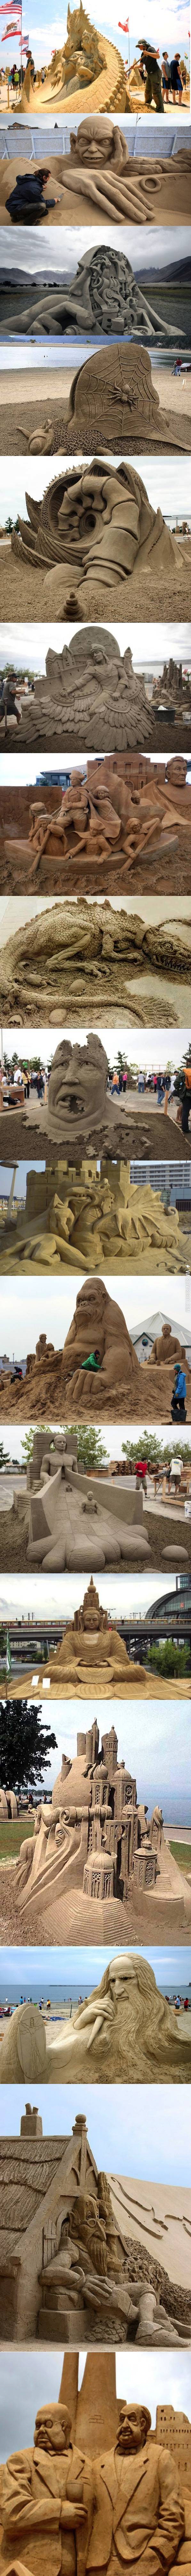 Sand+sculptures